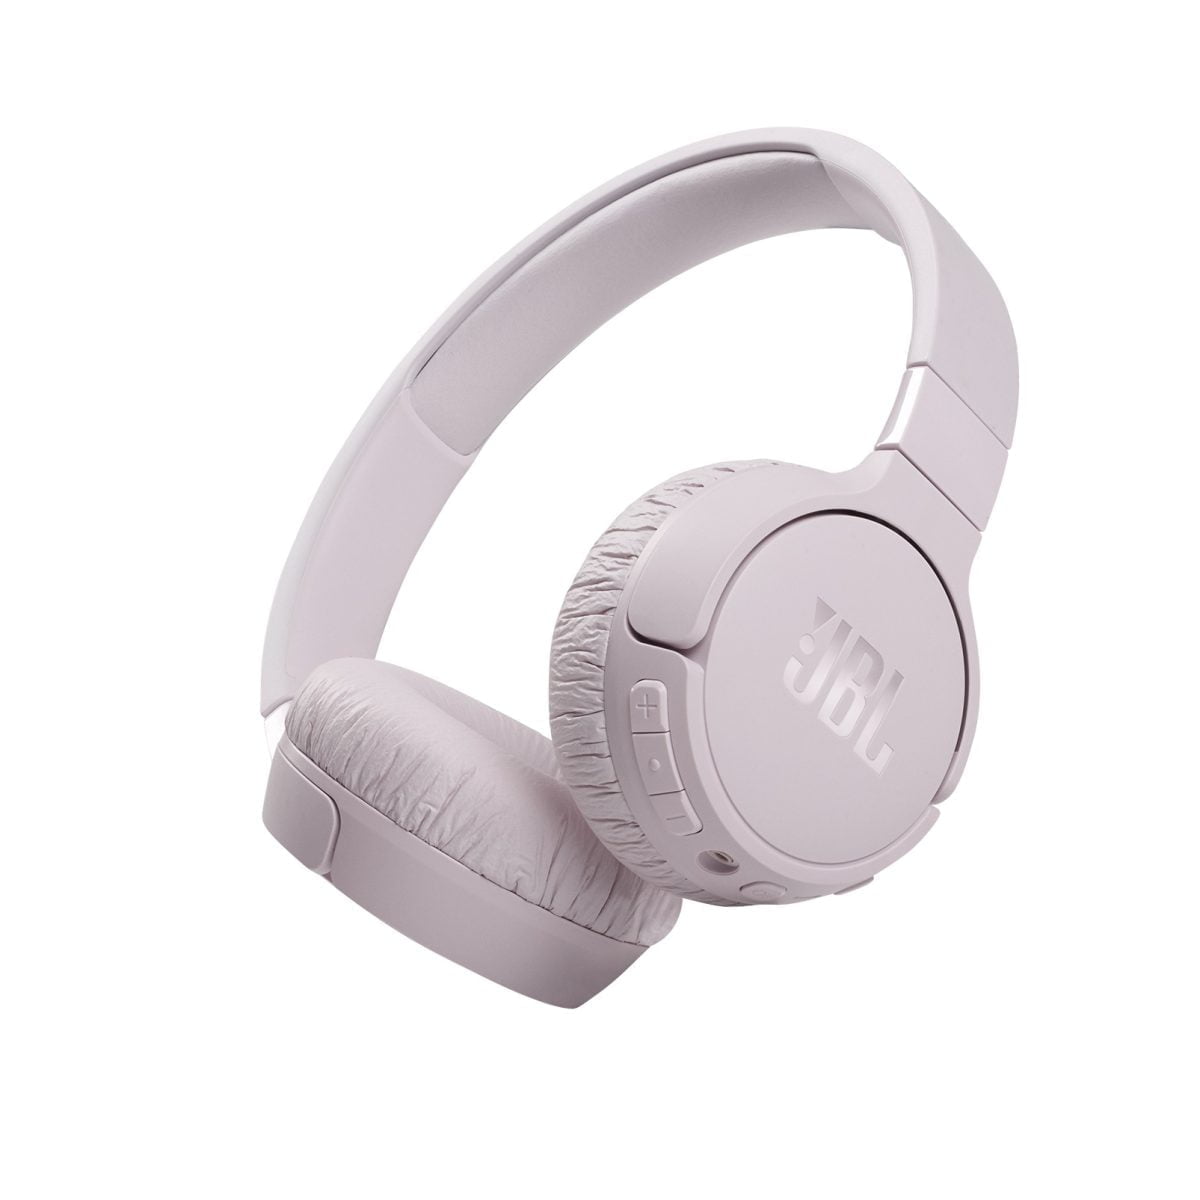 Jbl Tune 660Nc Product Image Hero Rose جي بي ال &Amp;Lt;H1&Amp;Gt;Jbl Tune 660Nc Wireless Headphones - Pink&Amp;Lt;/H1&Amp;Gt;
Https://Www.youtube.com/Watch?V=Lkryawrbnsm مع سماعات الرأس Tune 660Nc Noise Canceling ، ستحصل على صوت رائع وخالي من الضوضاء! استمتع بـ Jbl Pure Bass Sound لمدة تصل إلى 44 ساعة مع تشغيل Anc ثم أعد الشحن في لمح البصر (5 دقائق فقط لساعتين إضافيتين من البطارية). جي بي ال Jbl Tune 660Nc Wireless Headphones - Pink